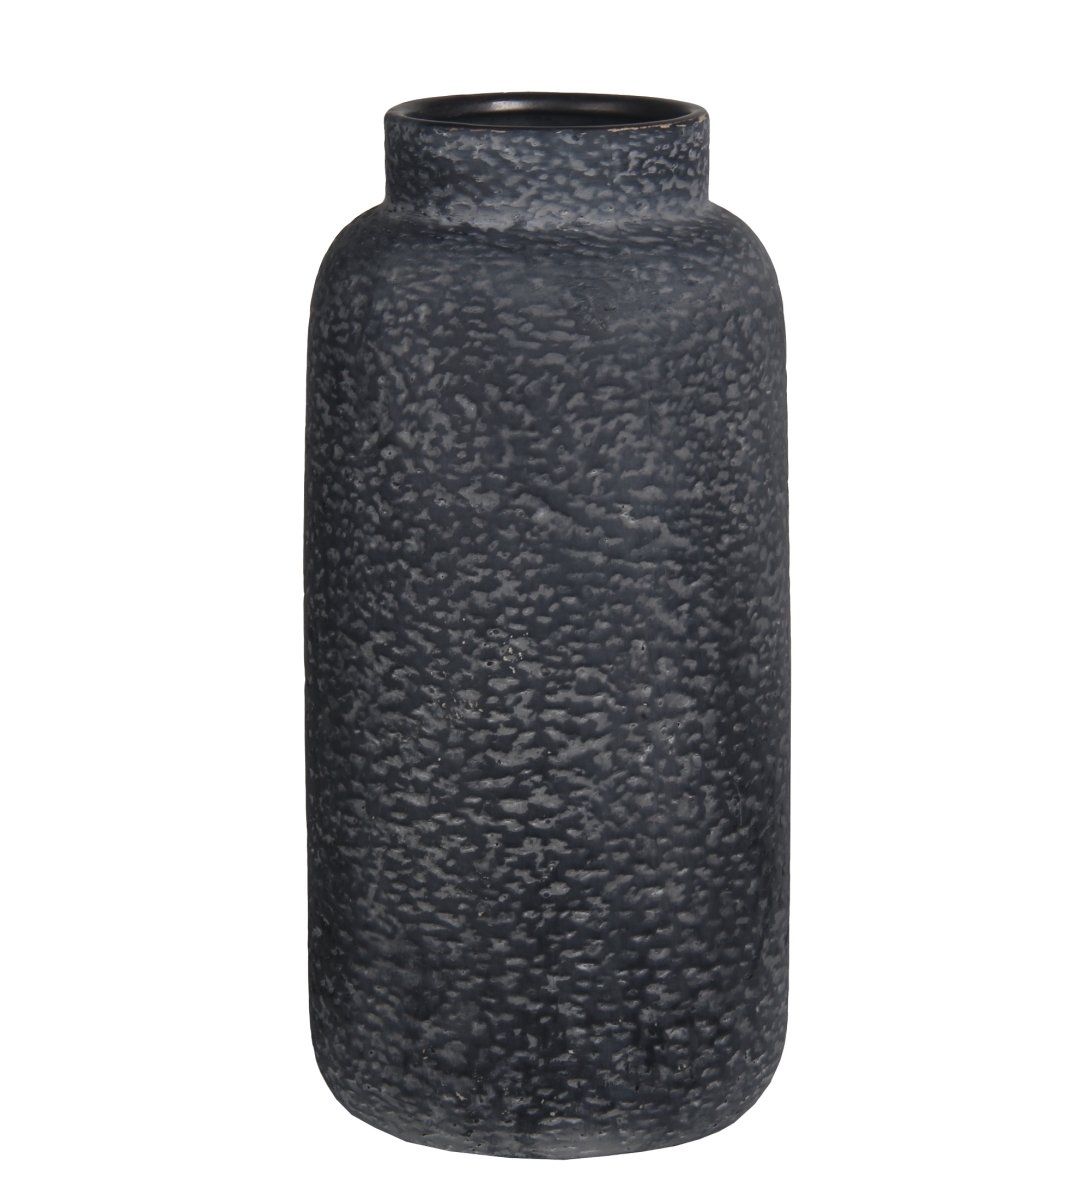 78210 6 X 6 X 13 In. Contemporary Ceramic Vase, Textured Grey - Large